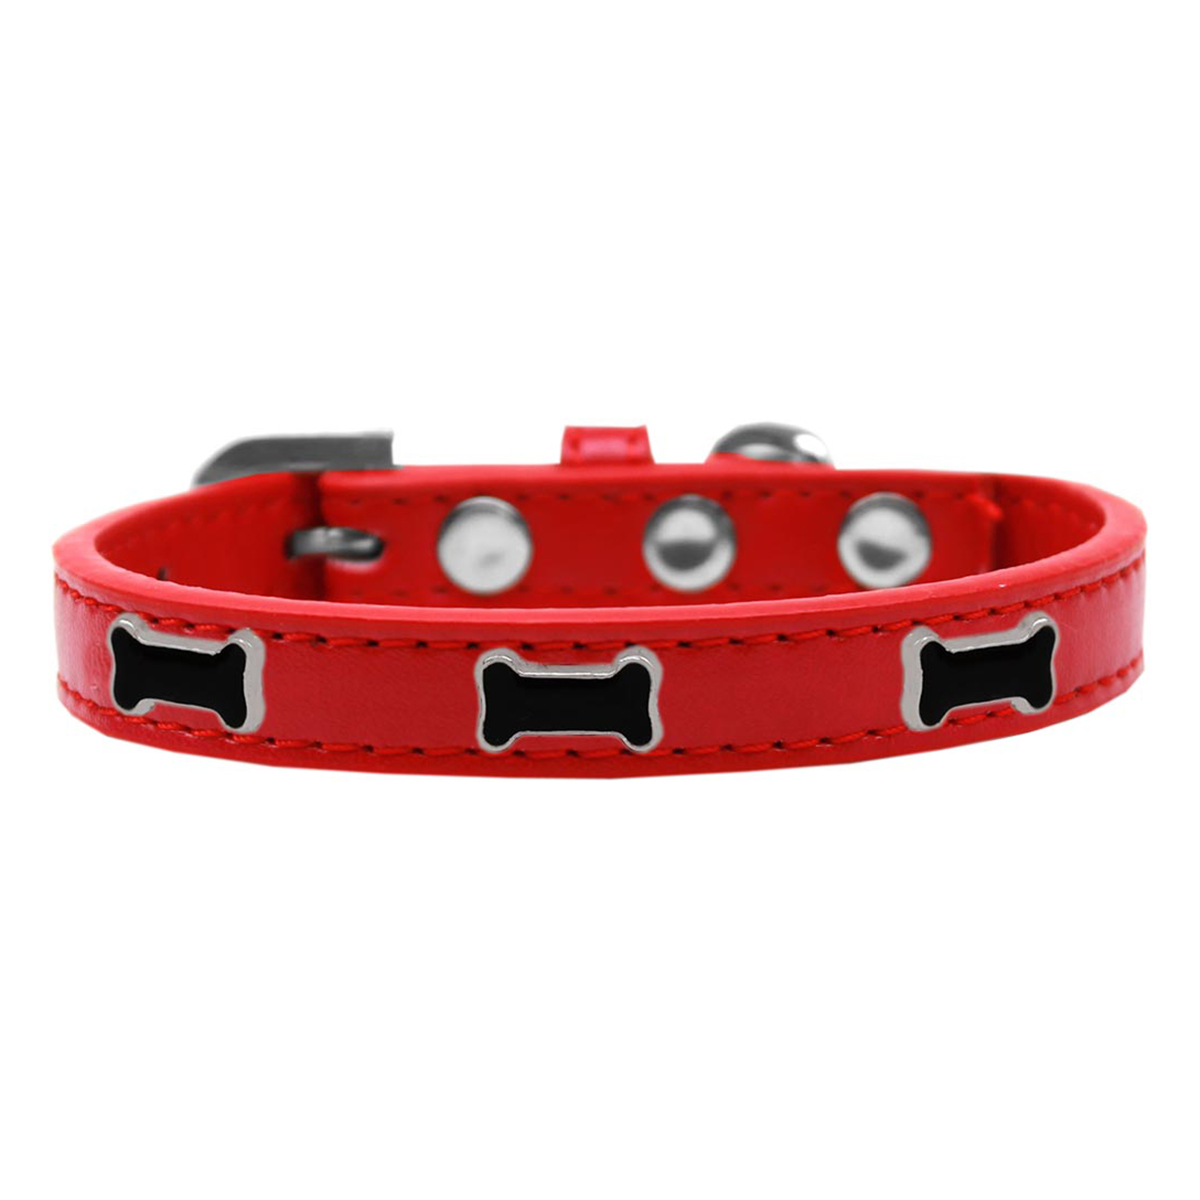 Black Bone Widget Dog Collar, Red - Size 18